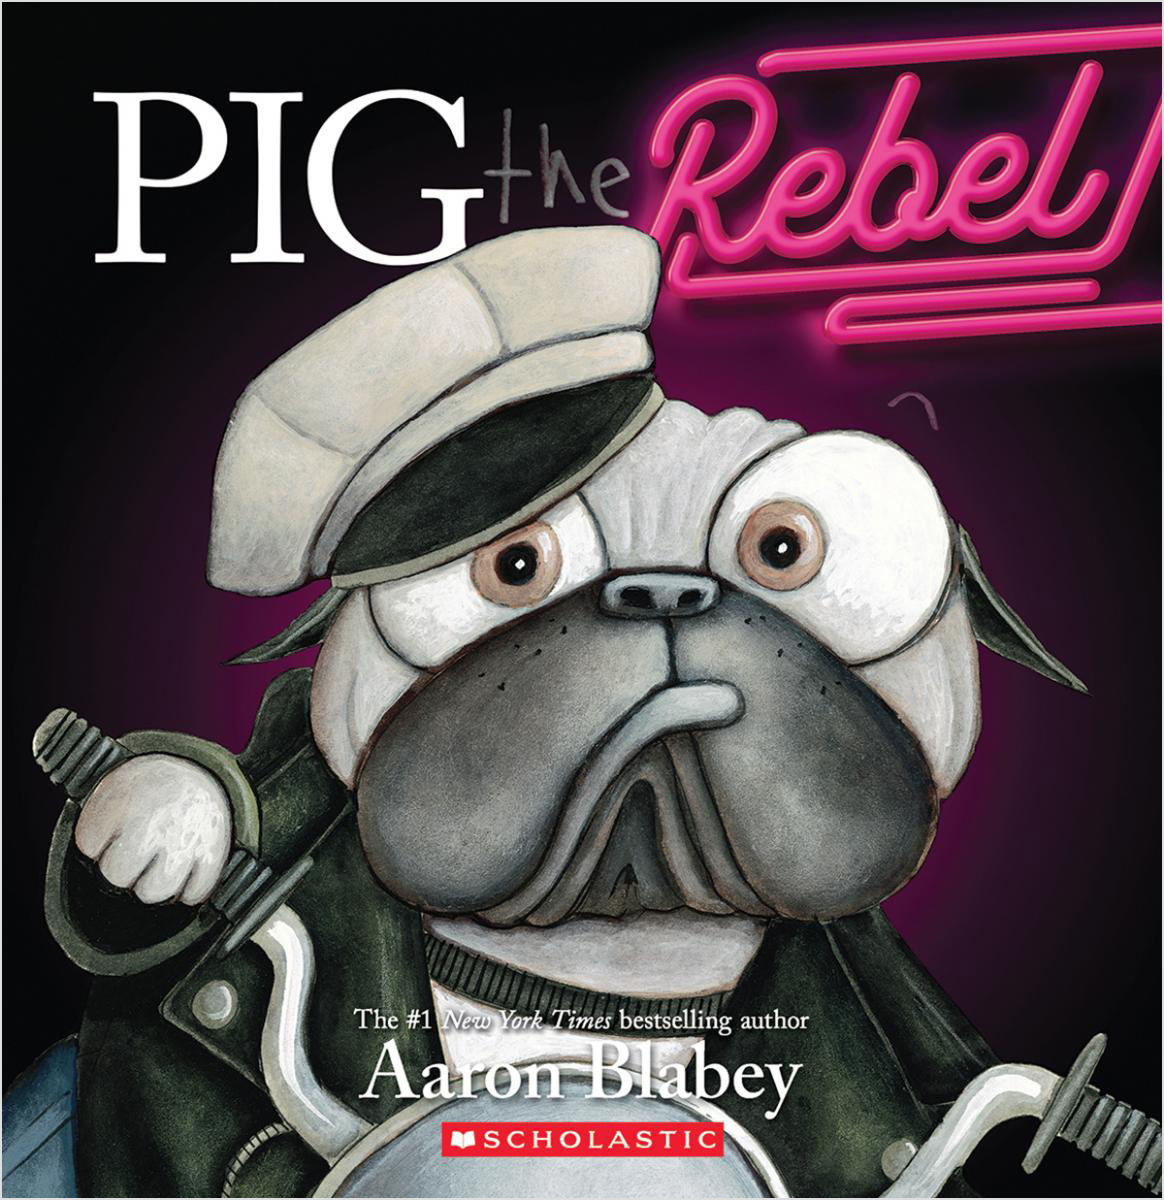  Pig the Rebel 